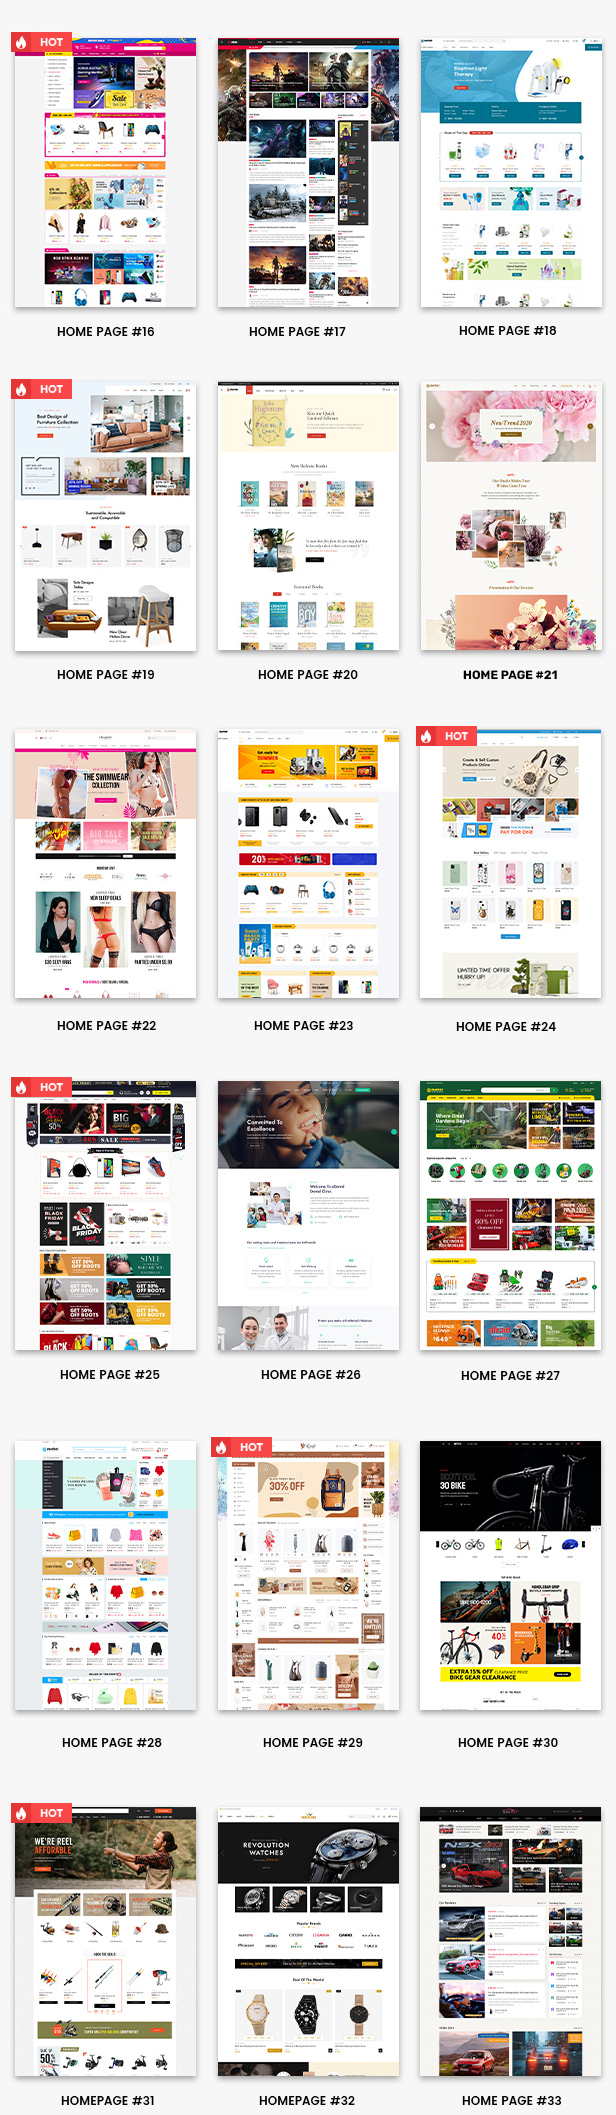 eMarket - Multi Vendor MarketPlace WordPress Theme - WooCommerce Theme